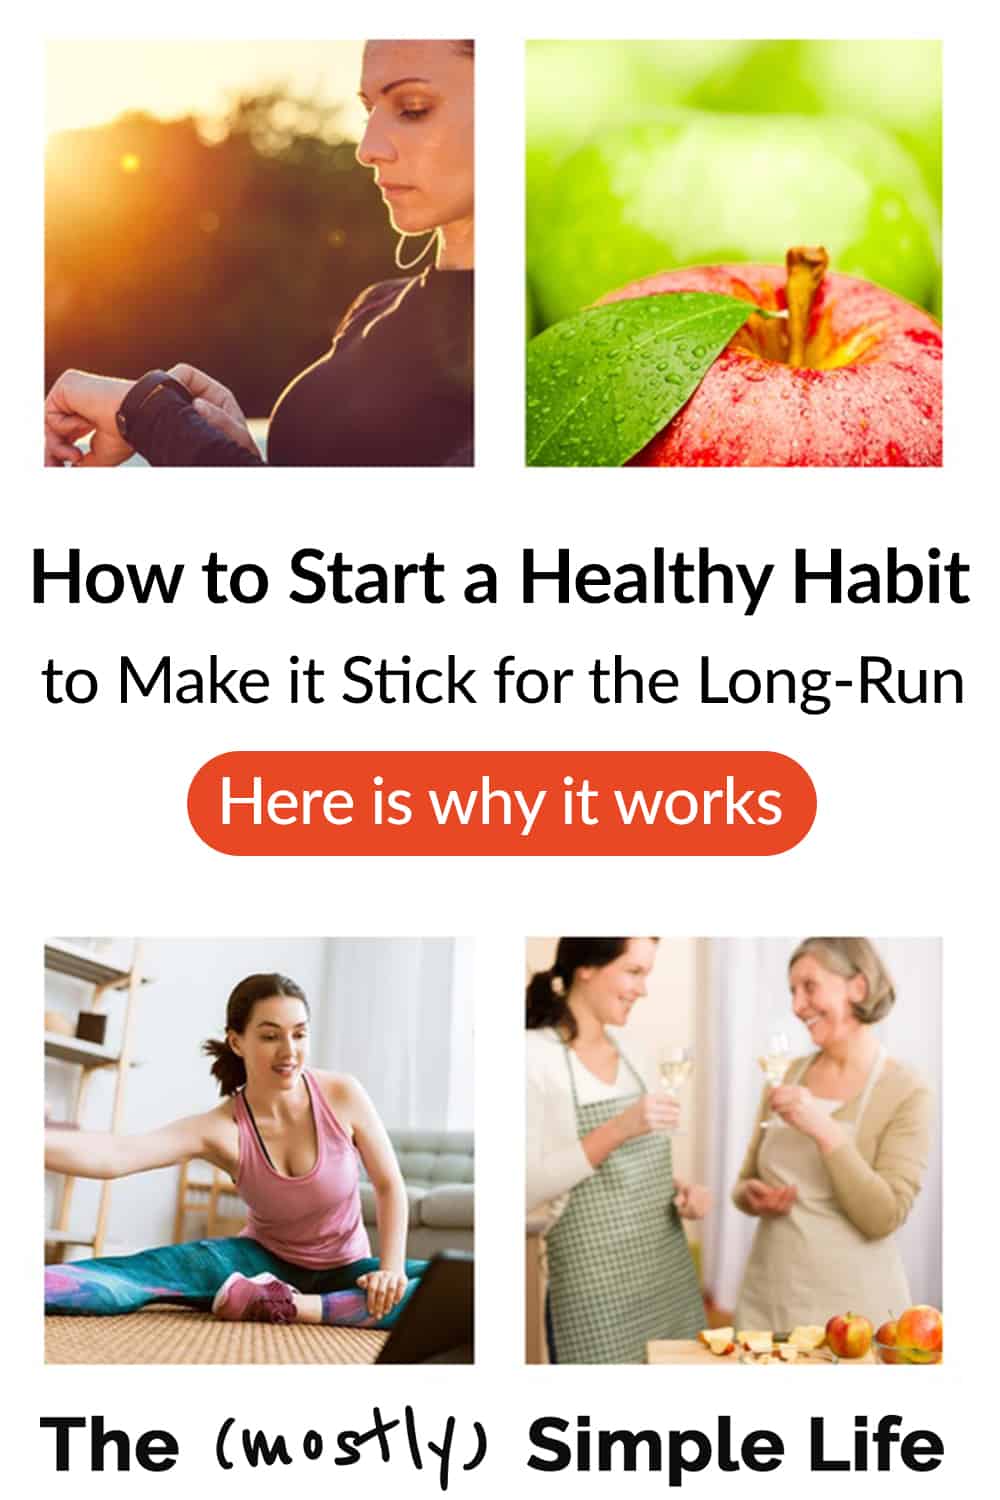 The 3 Best Ways to Start A New Healthy Habit & Make It Stick (Scientifically Proven)